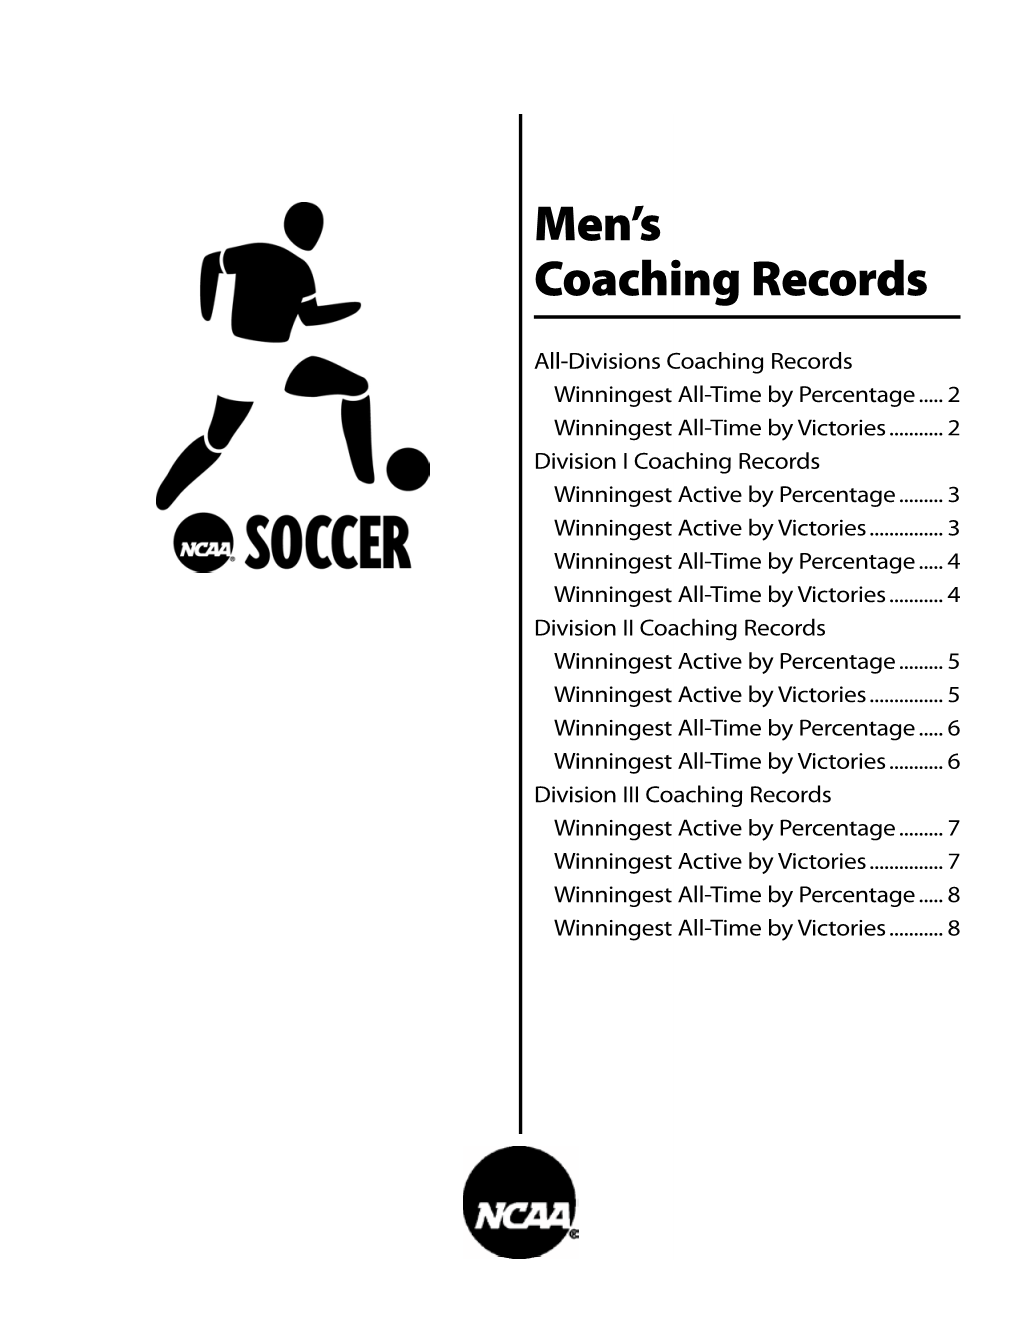 Coaching Records